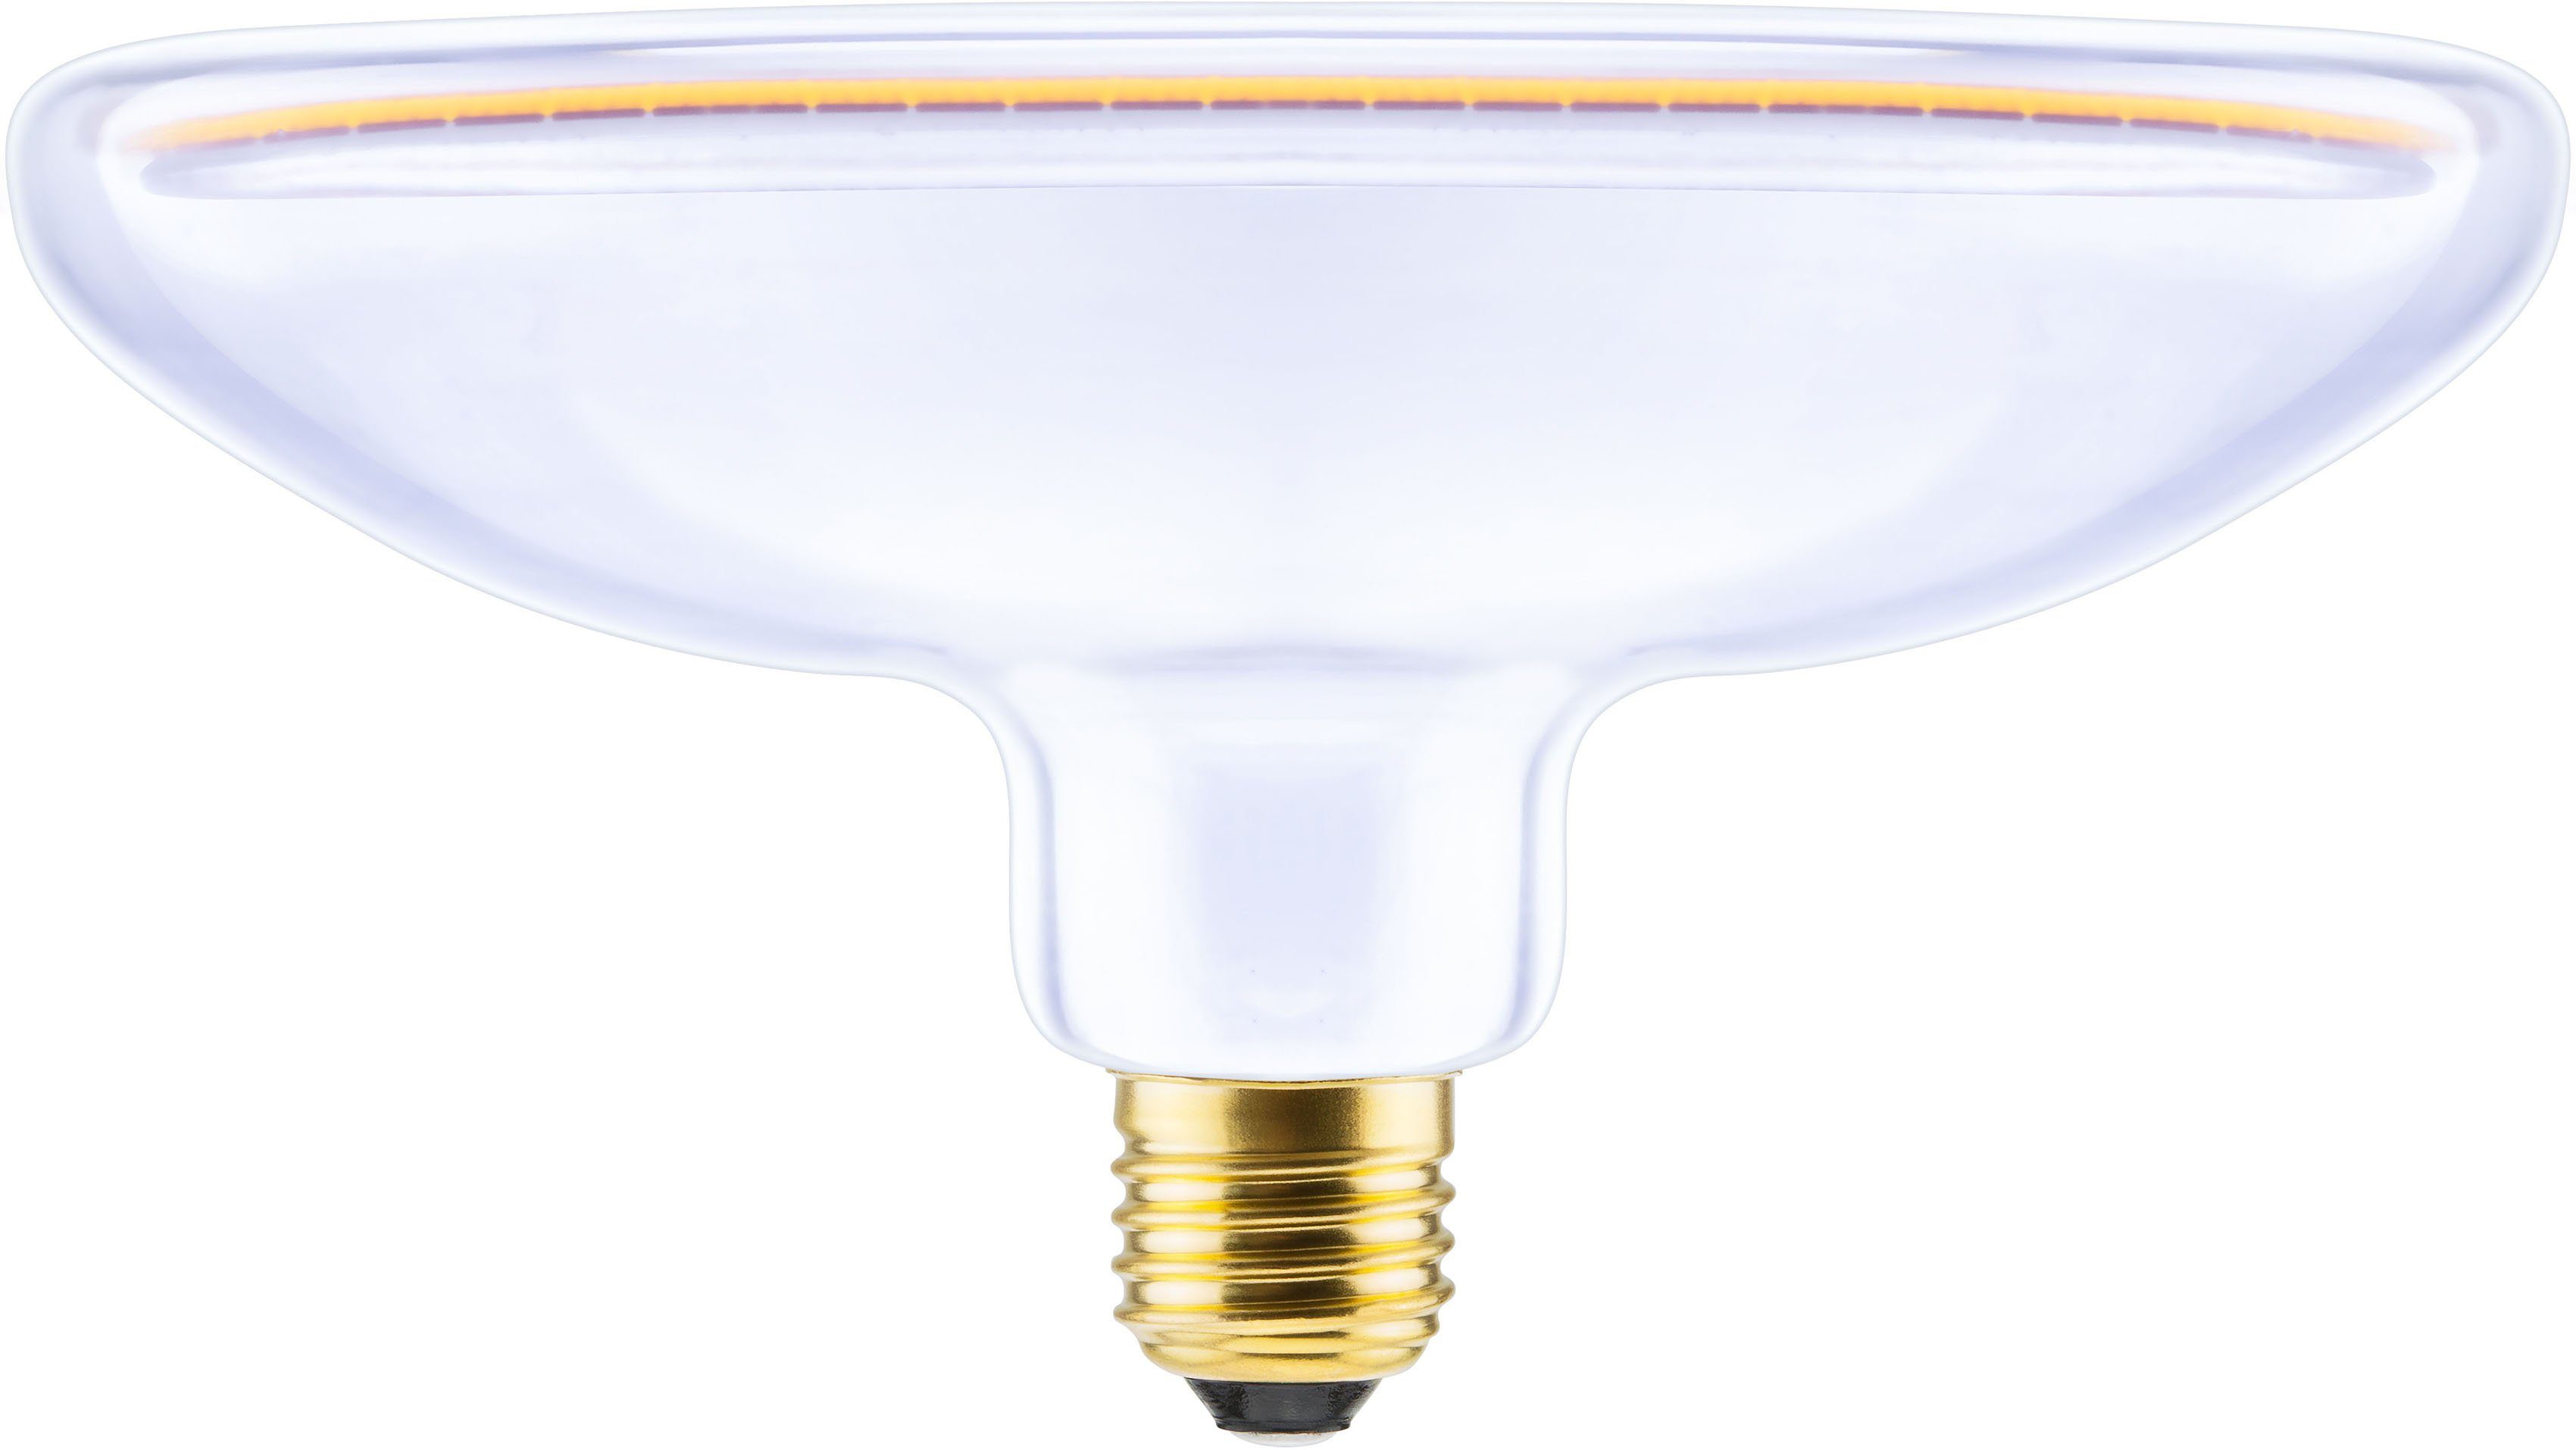 SEGULA LED Floating Reflektor R200 klar LED-Leuchtmittel, E27, Warmweiß,  dimmbar, E27, Floating Reflektor R200 klar